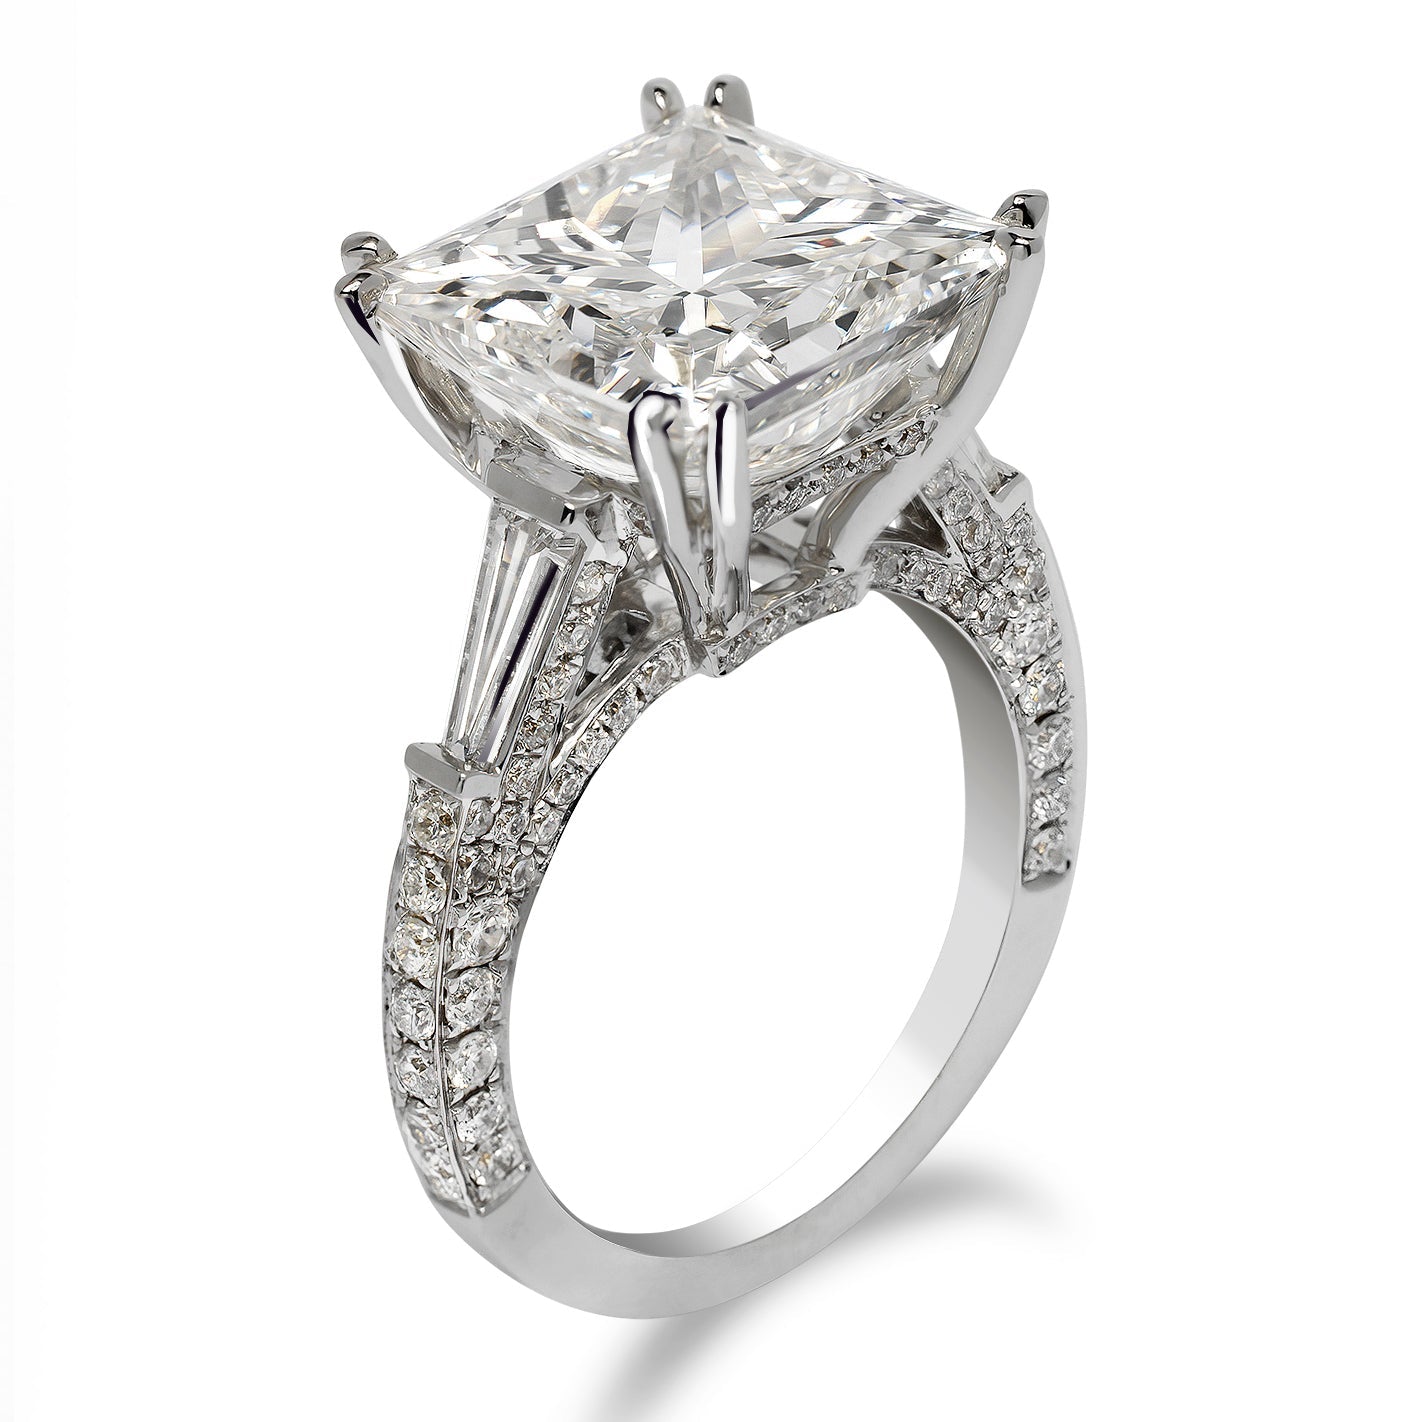 SKYLAR 10 Carat Princess Cut Diamond Ring